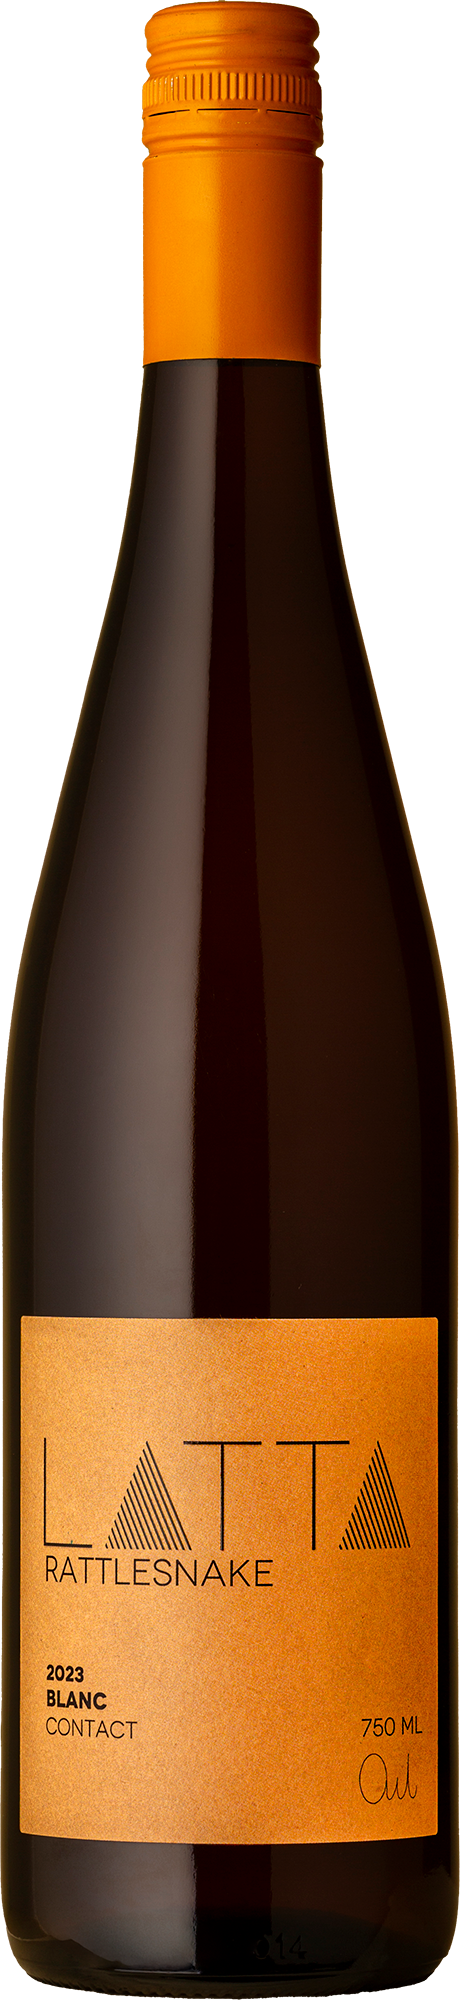 Latta - Rattlesnake Blanc Contact 2023 Orange Wine